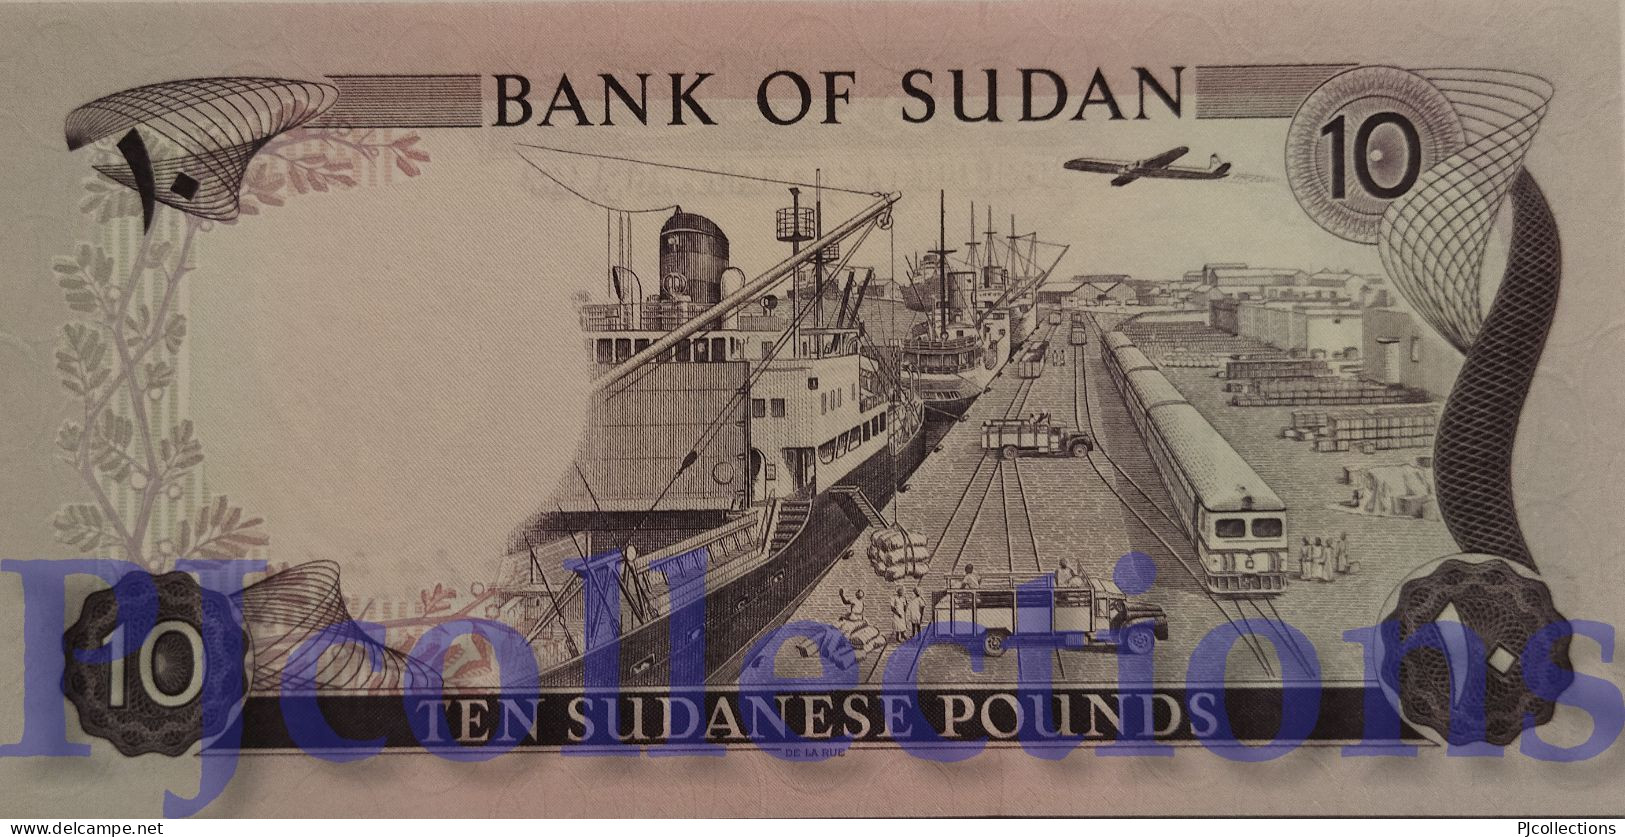 SUDAN 10 POUNDS 1980 PICK 15c UNC LOW SERIAL NUMBER "002035" - Sudan